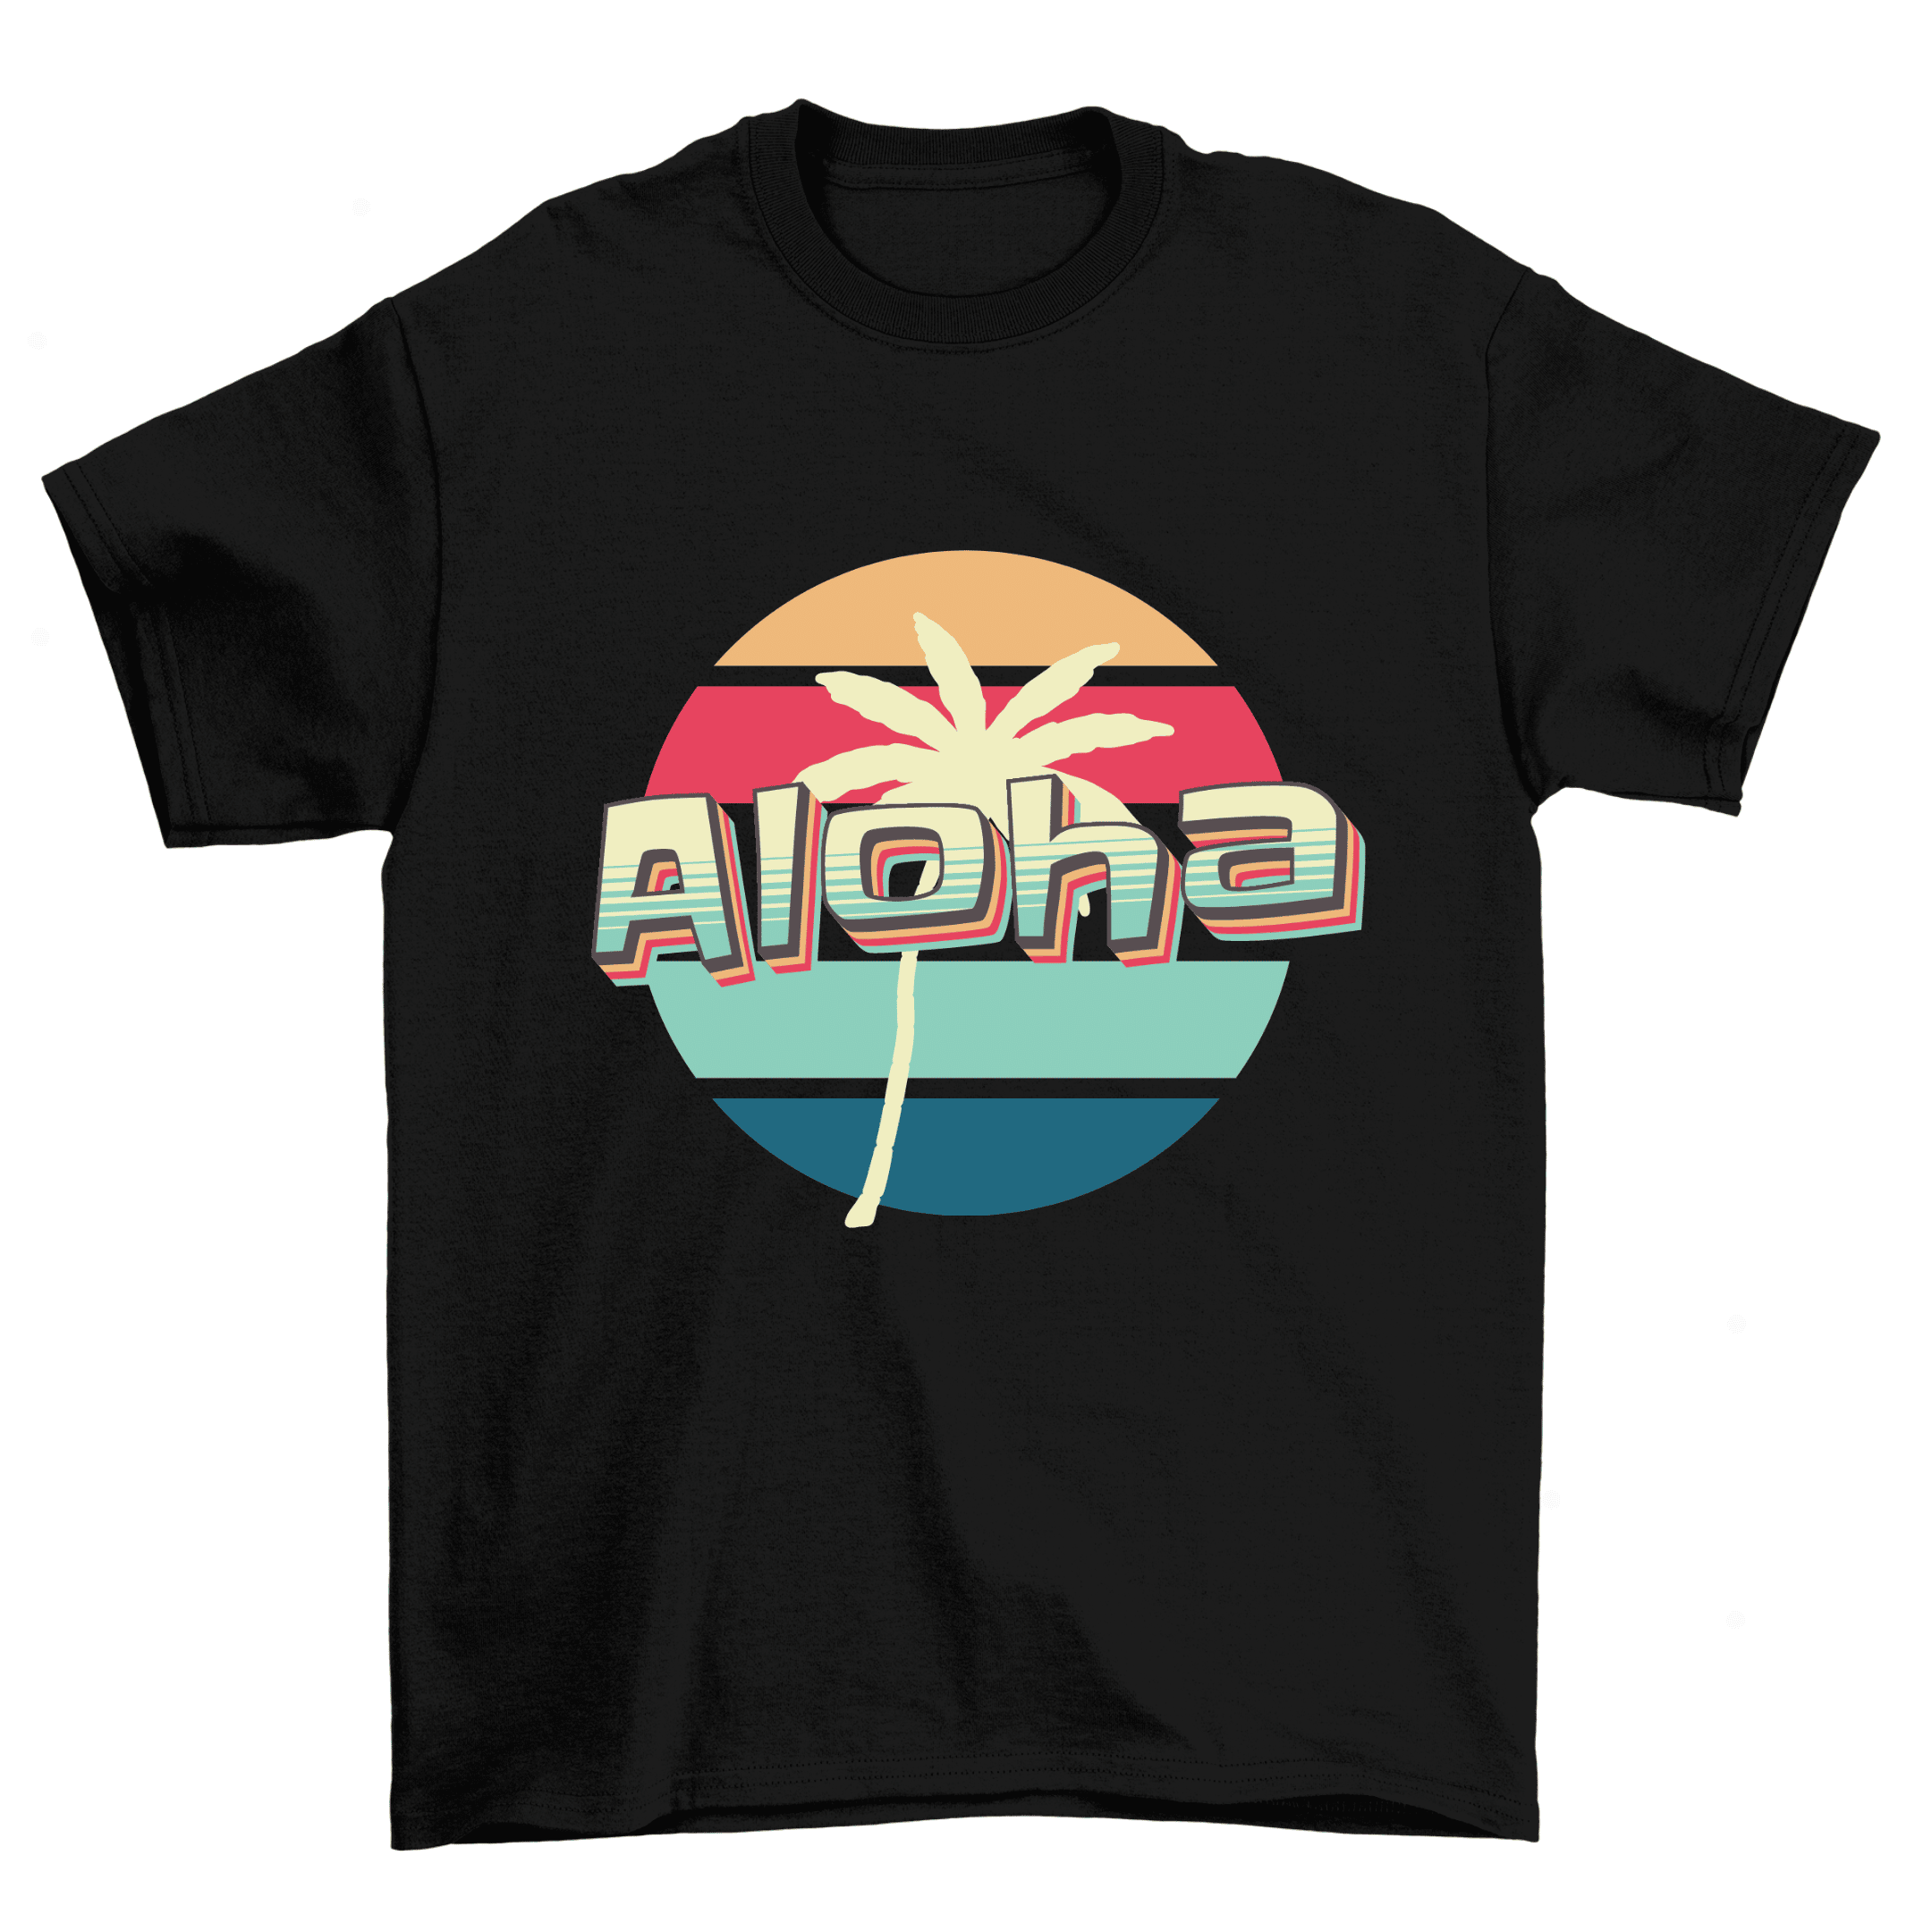 Aloha: Unisex Graphic T-shirt | Graphic Tees